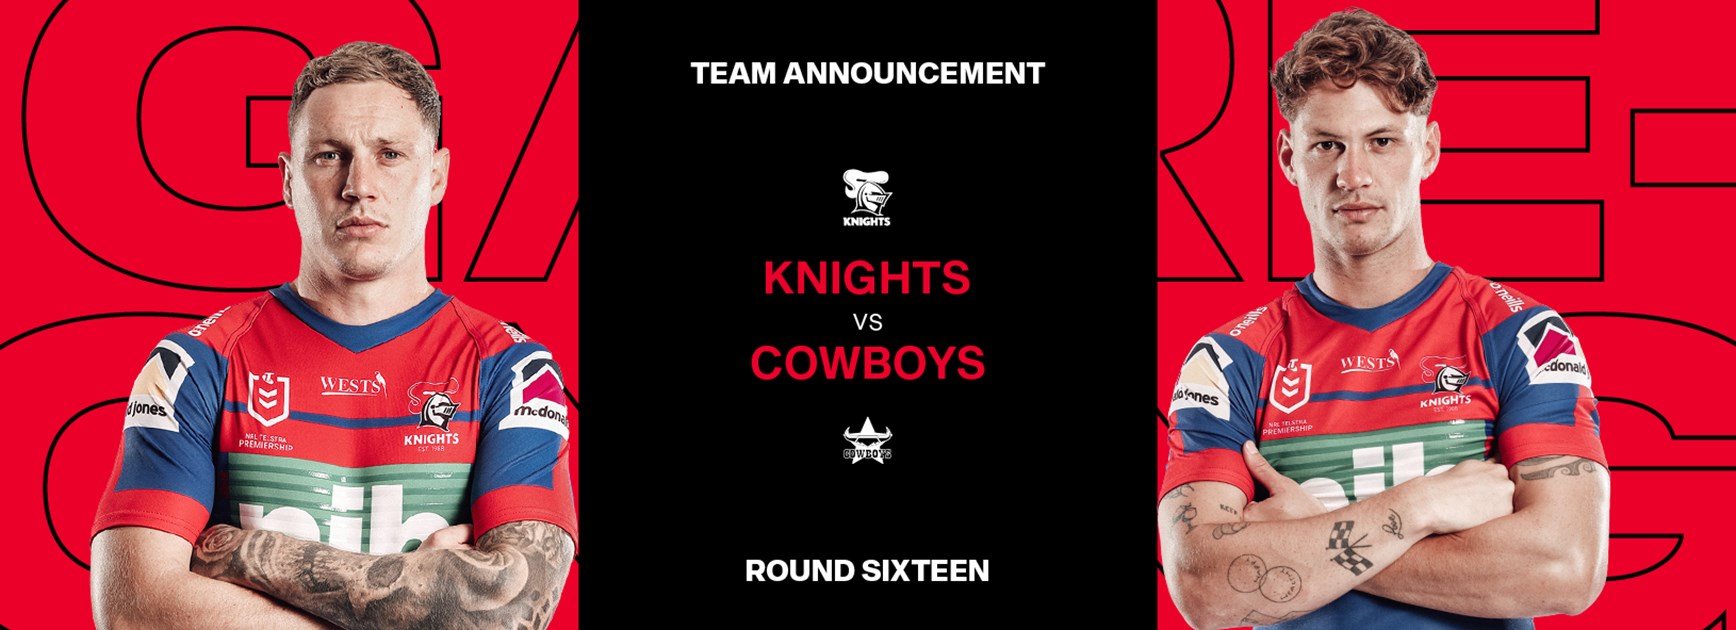 Knights V Cowboys Round 16 Nrl Team List Knights [ 630 x 1736 Pixel ]